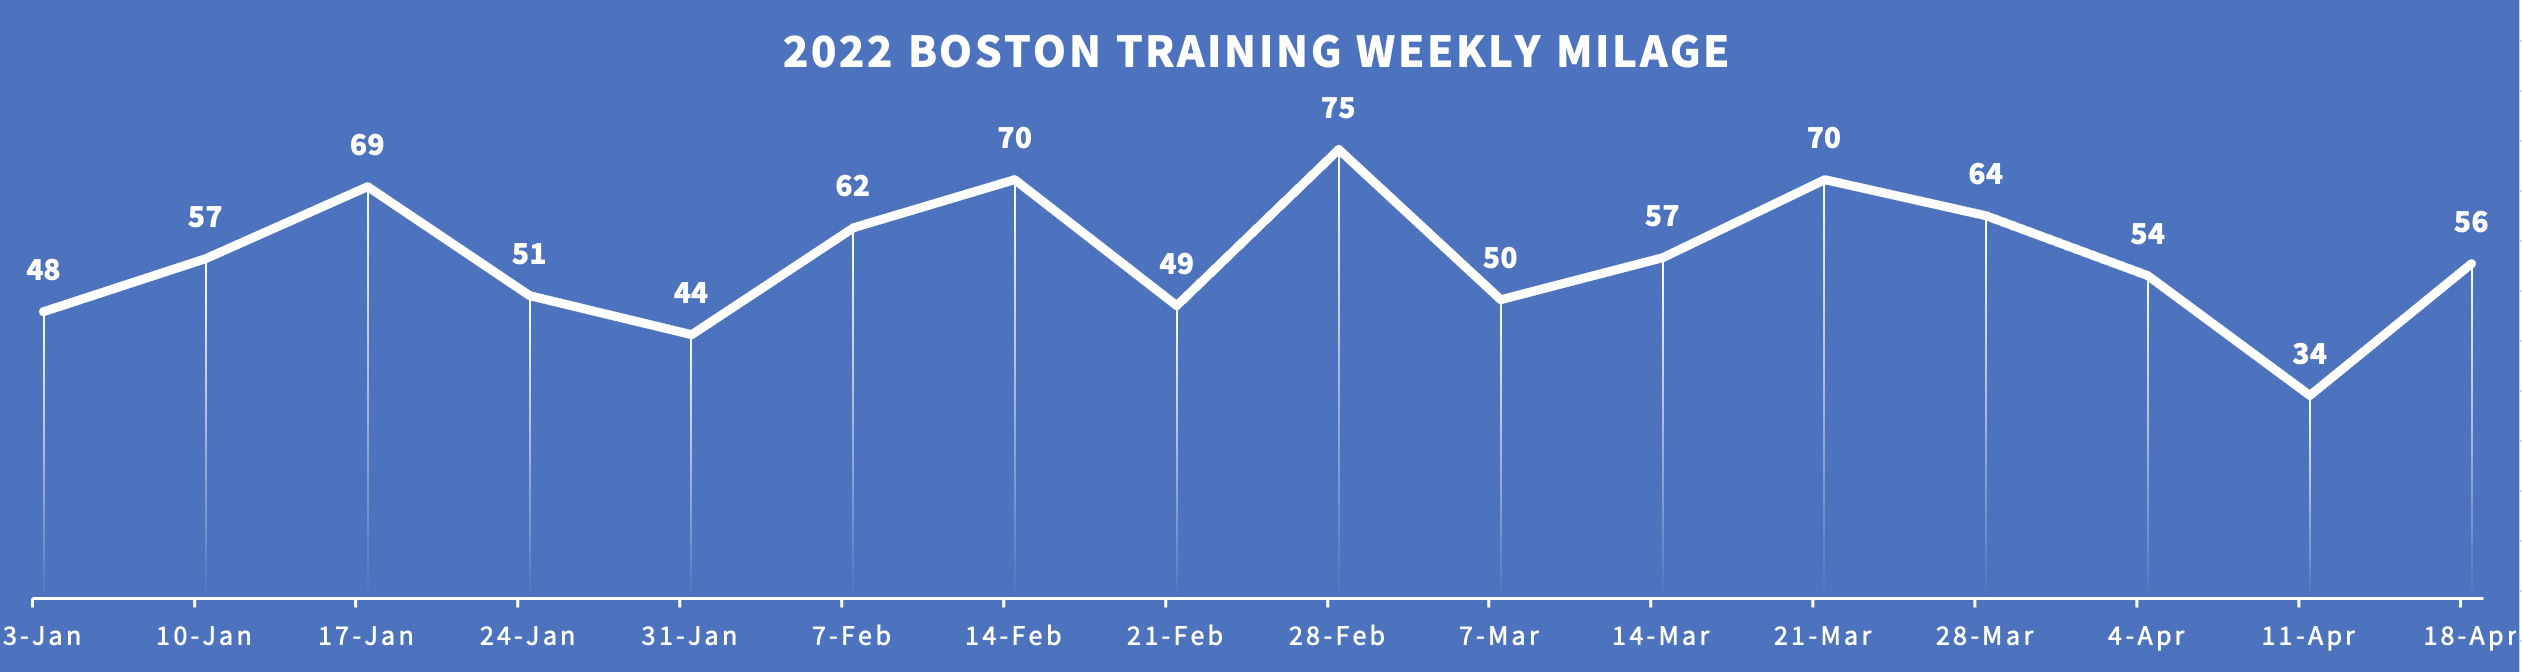 2022 Boston Training Mileage